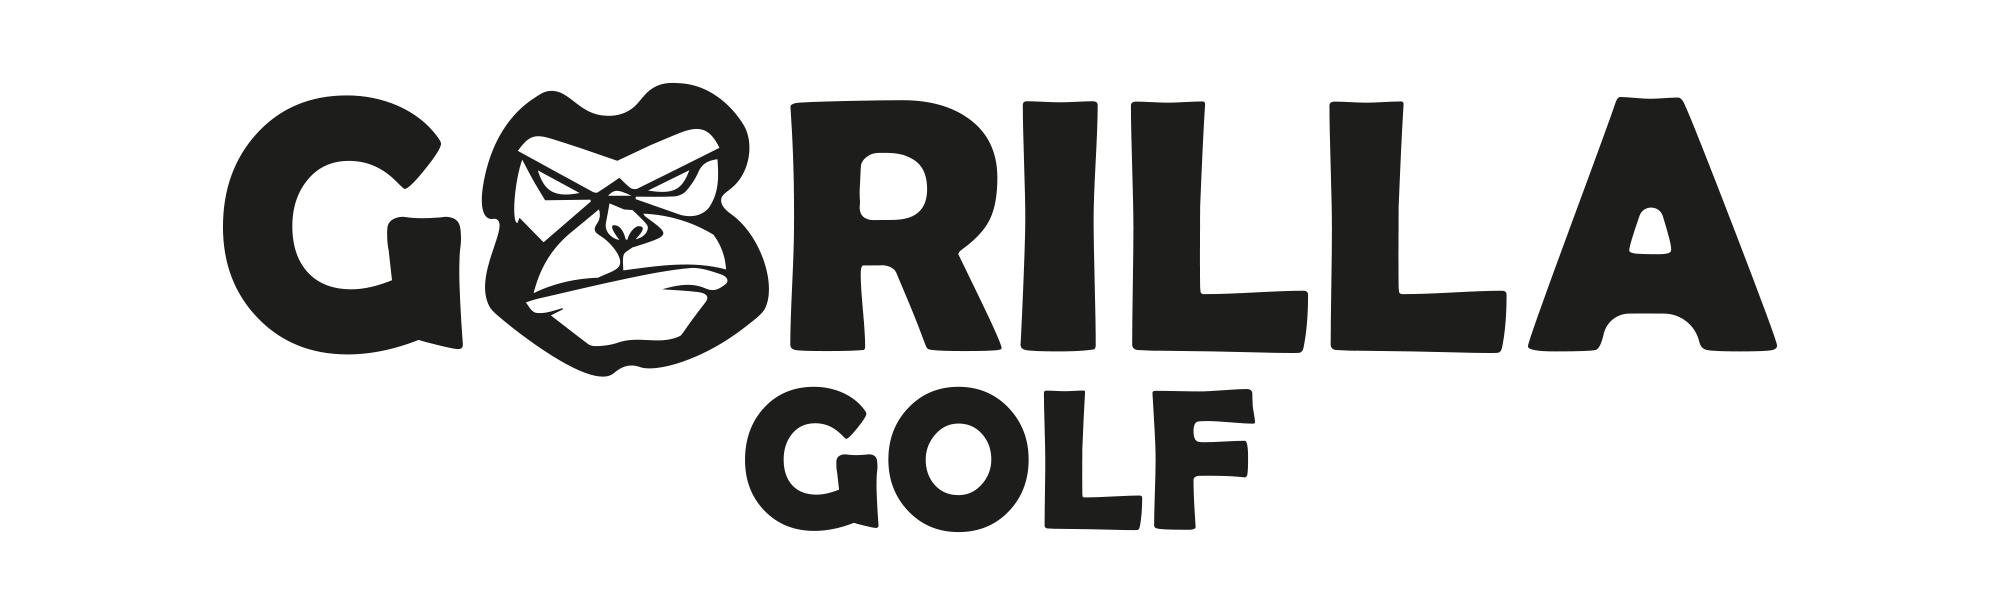 gorilla_golf_logo_noir